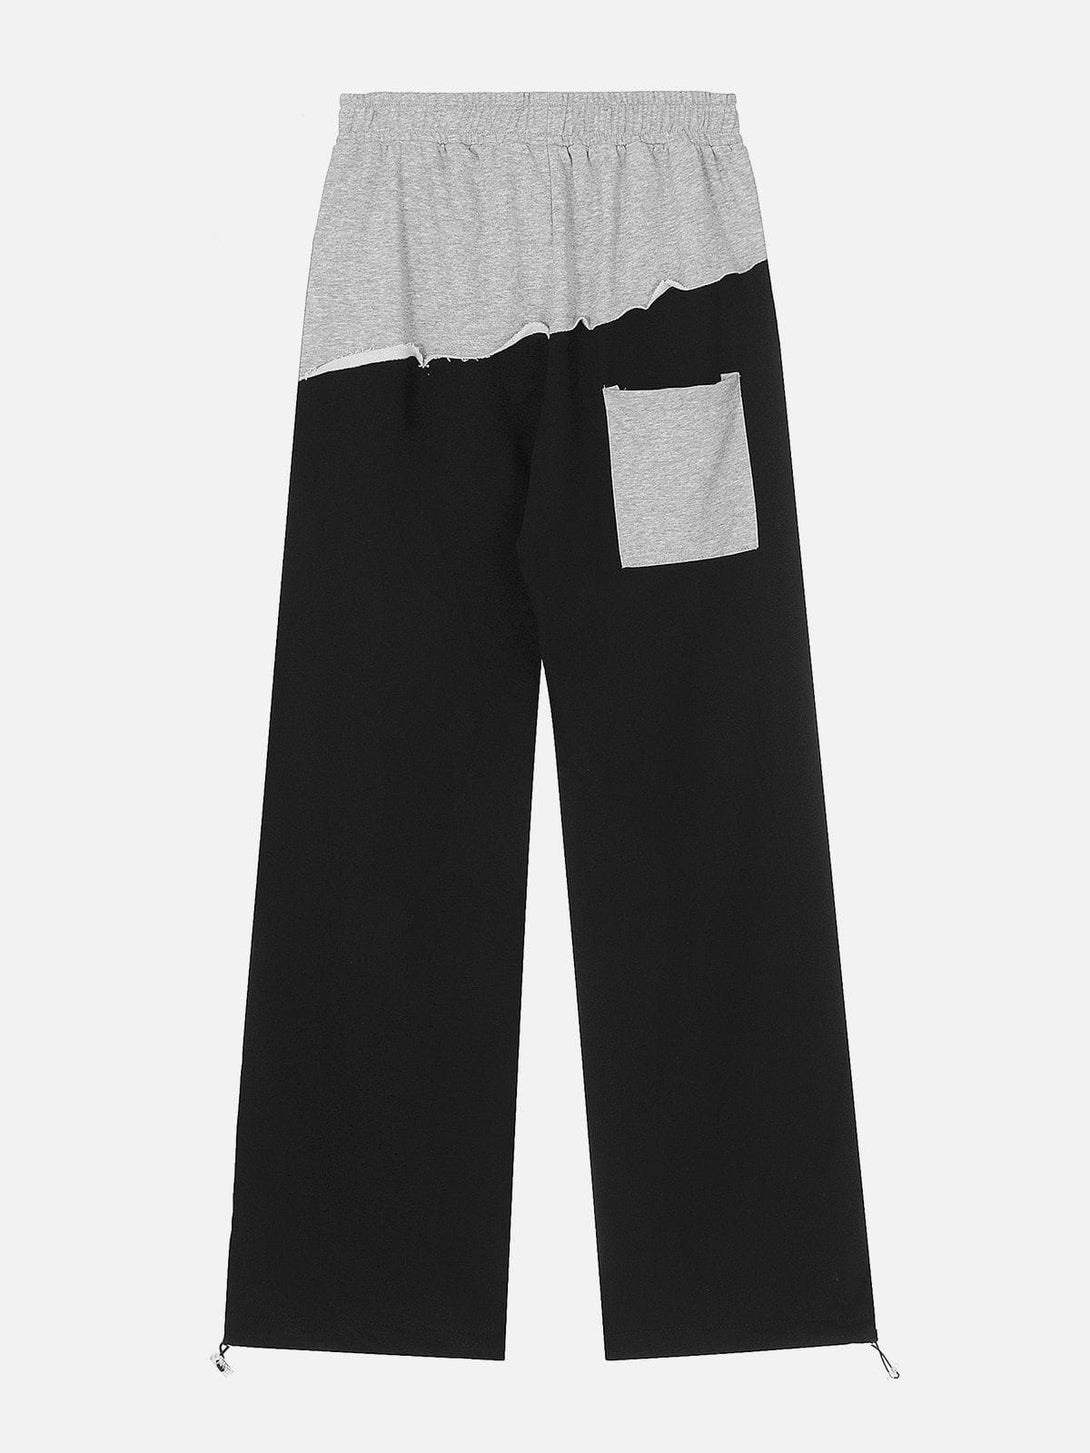 Levefly - Contrast Panel Lettered Flocked Sweatpants - Streetwear Fashion - levefly.com